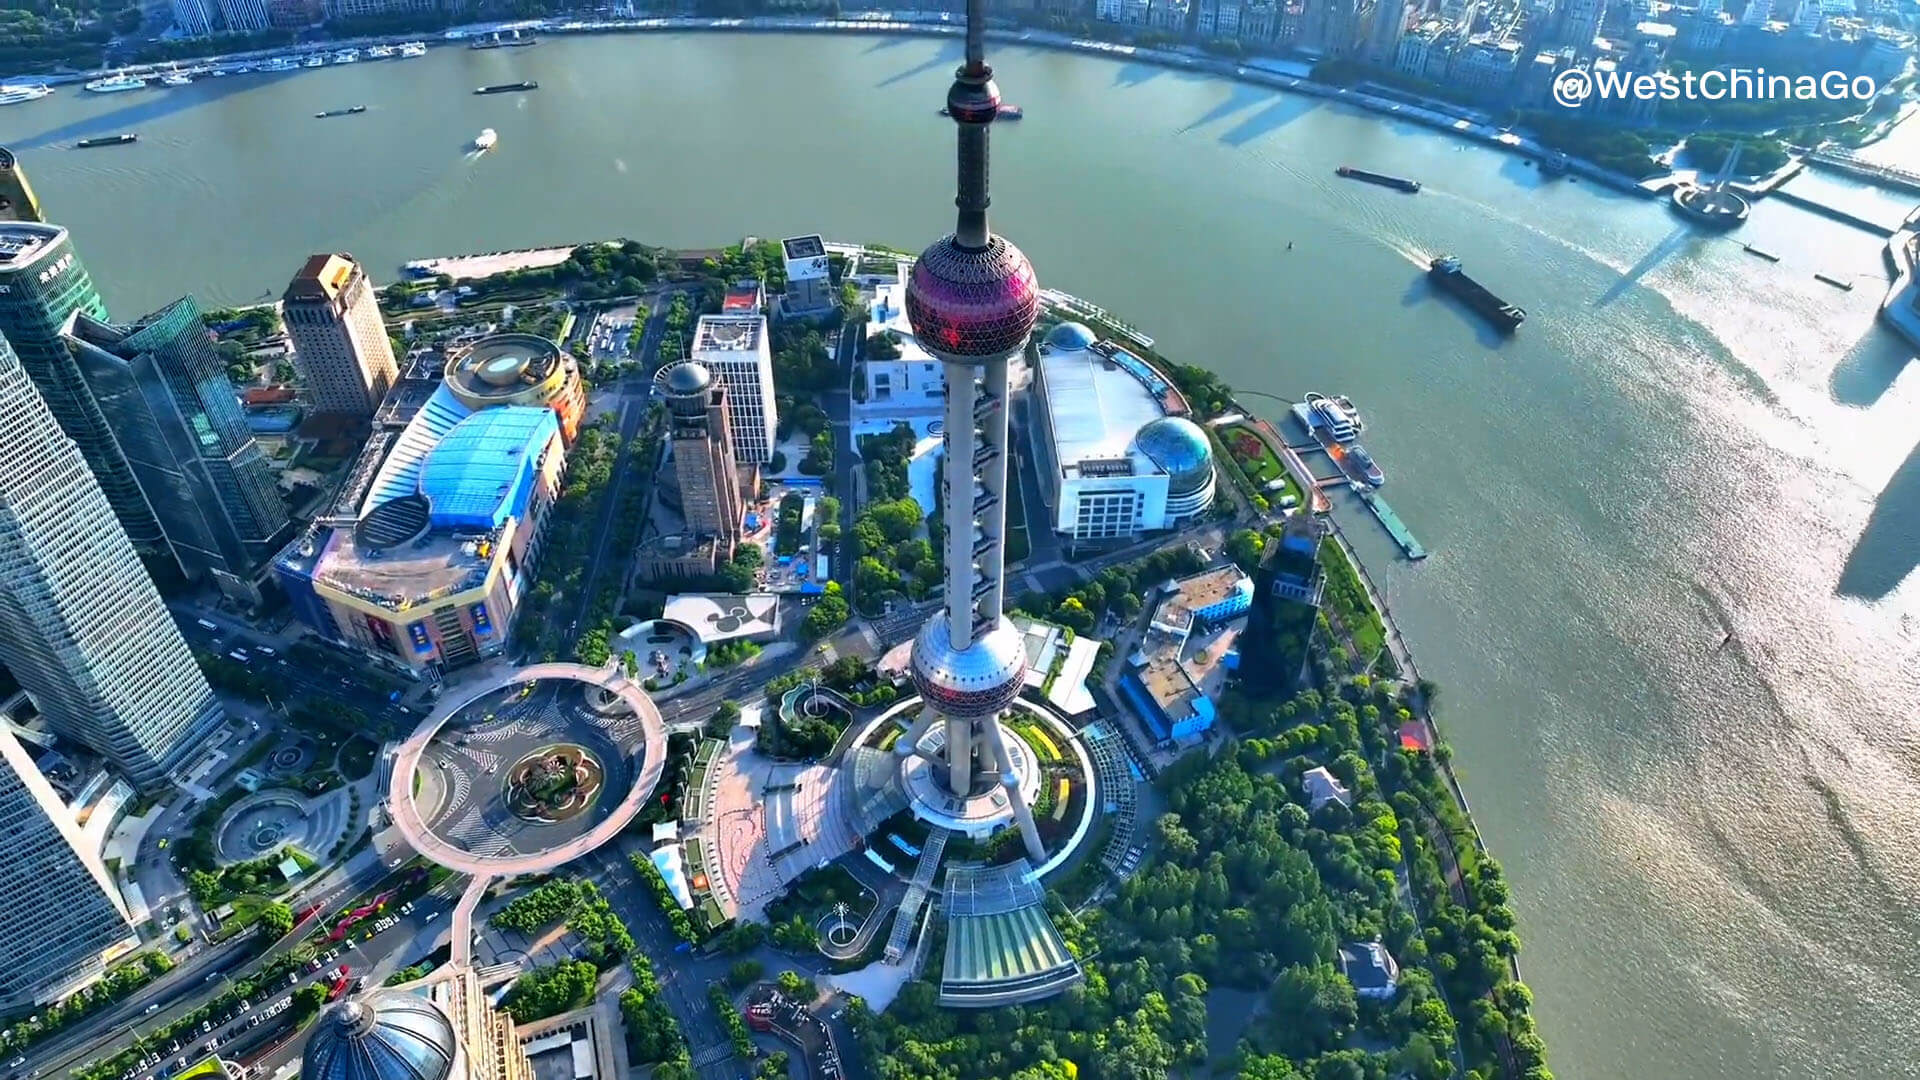 Shanghai Oriental Pearl TV Tower 